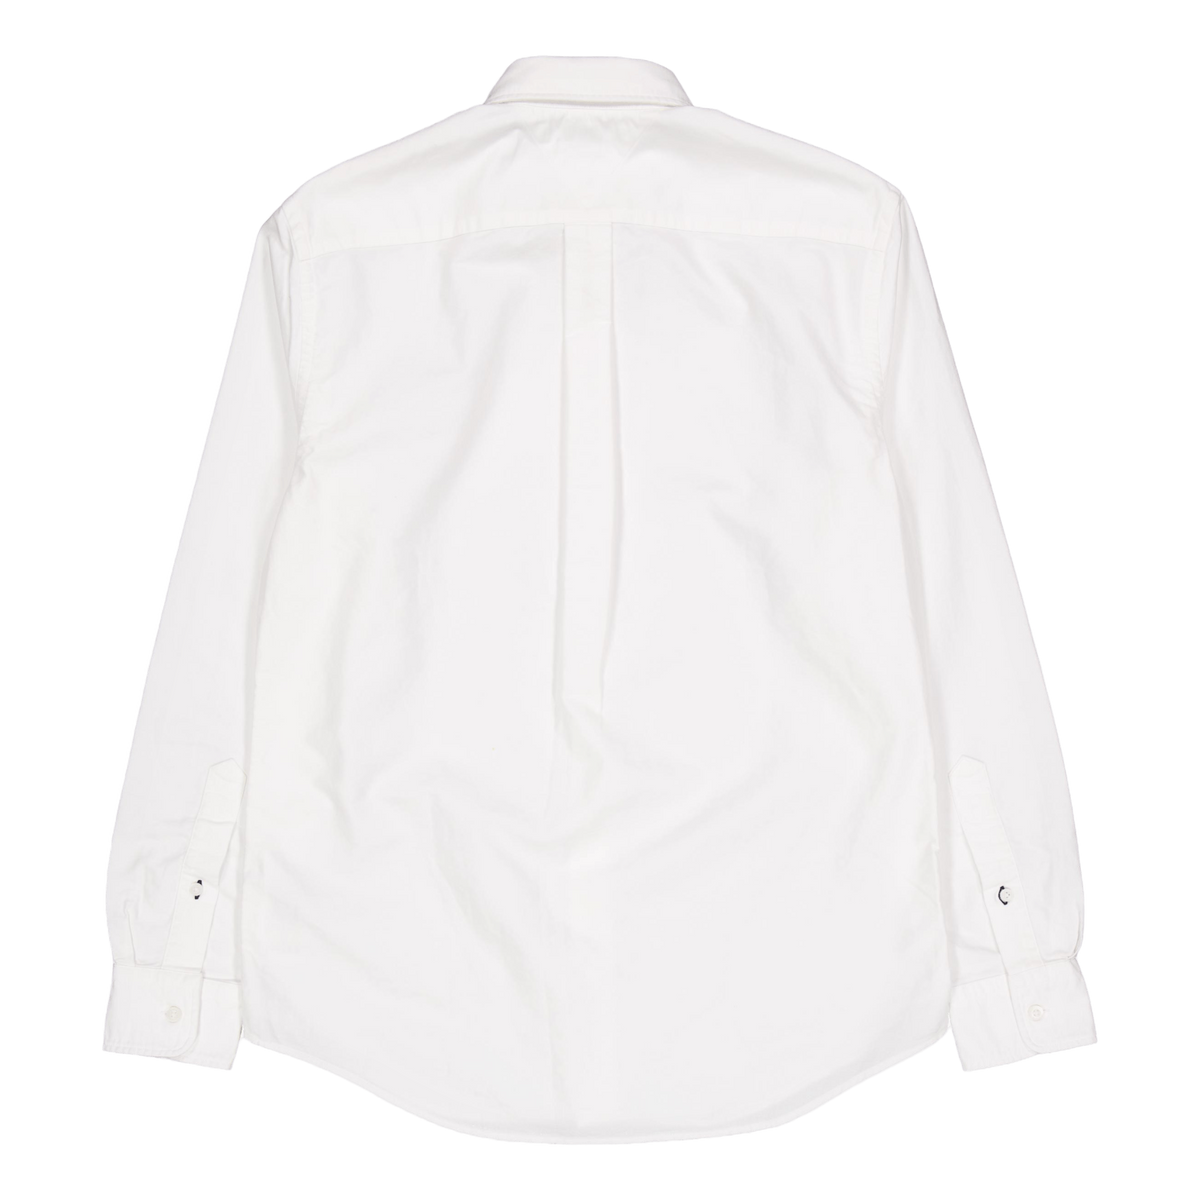 Solid Heritage Oxford Rf Shirt Ycf-optic White